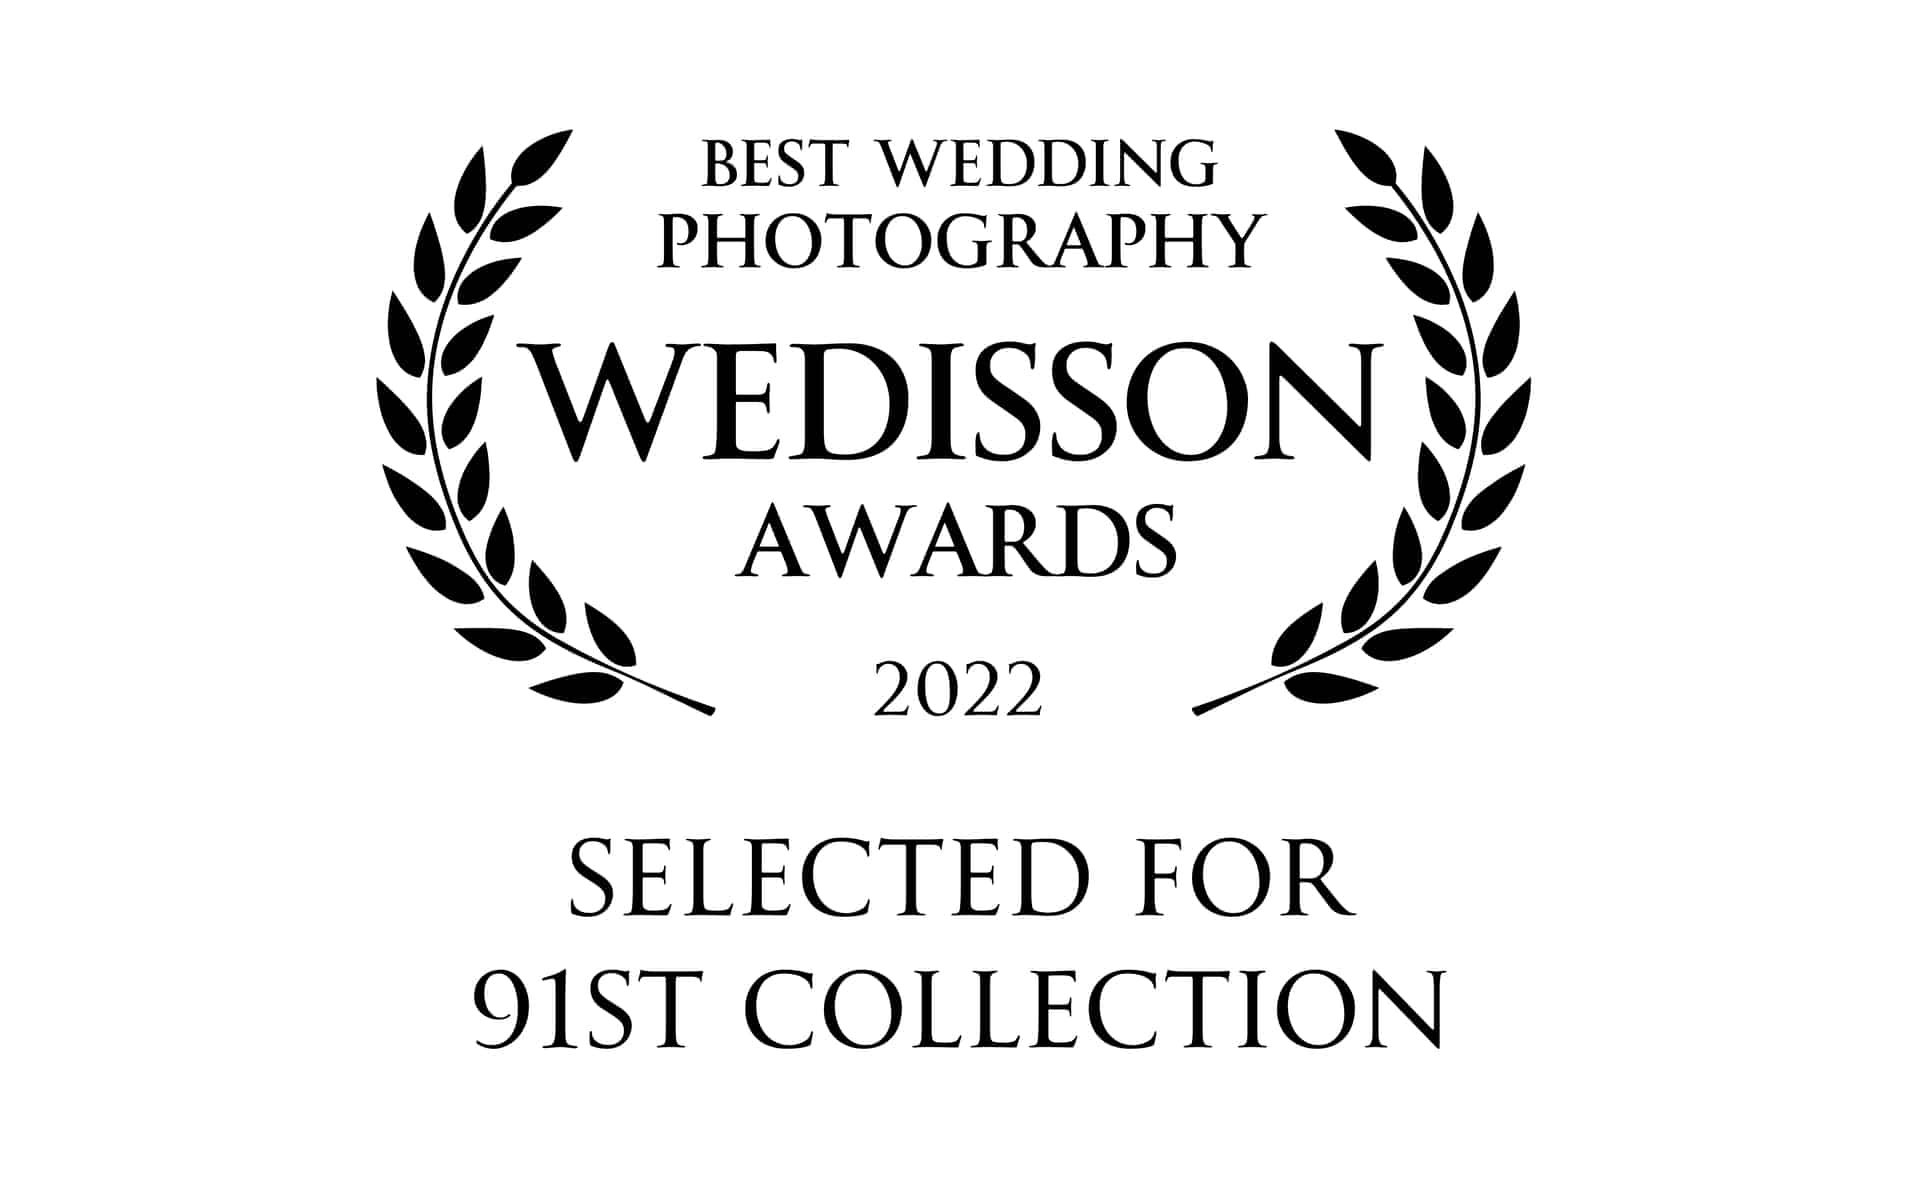 Wedisson Award 2022